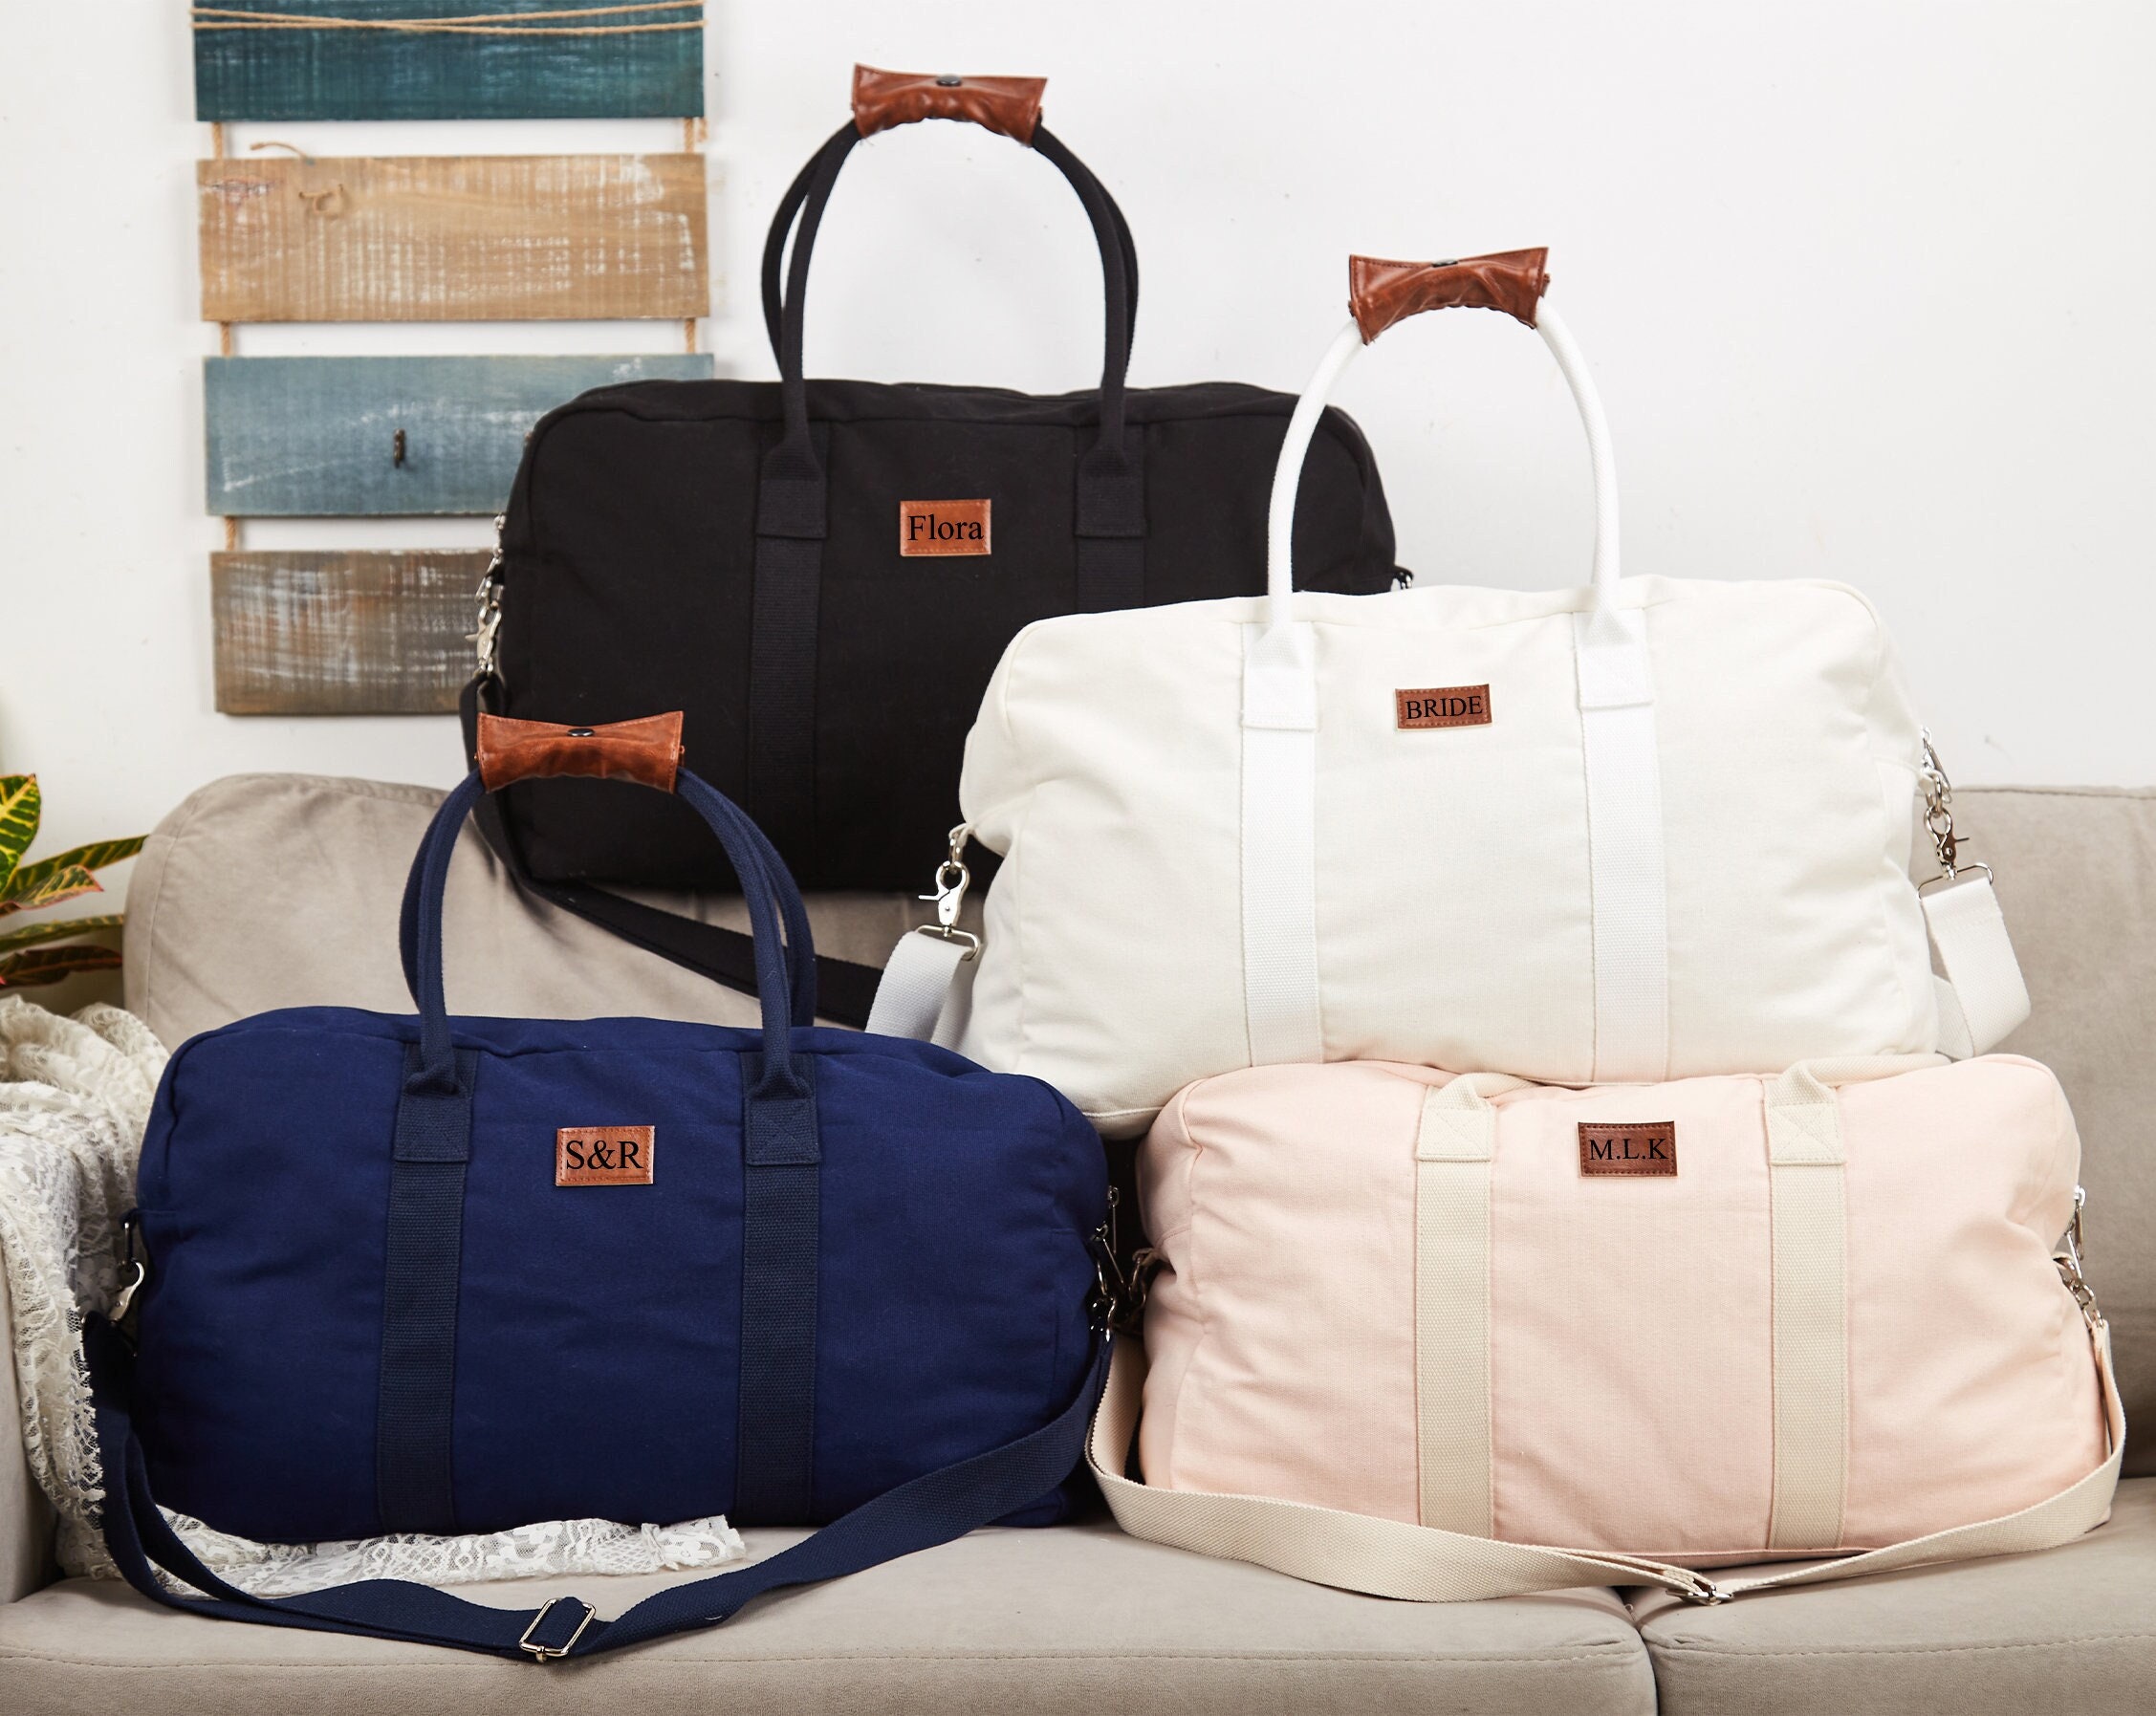 Maroon Travel Duffel Bag for Men & Women 4039 – Galaxy Bags